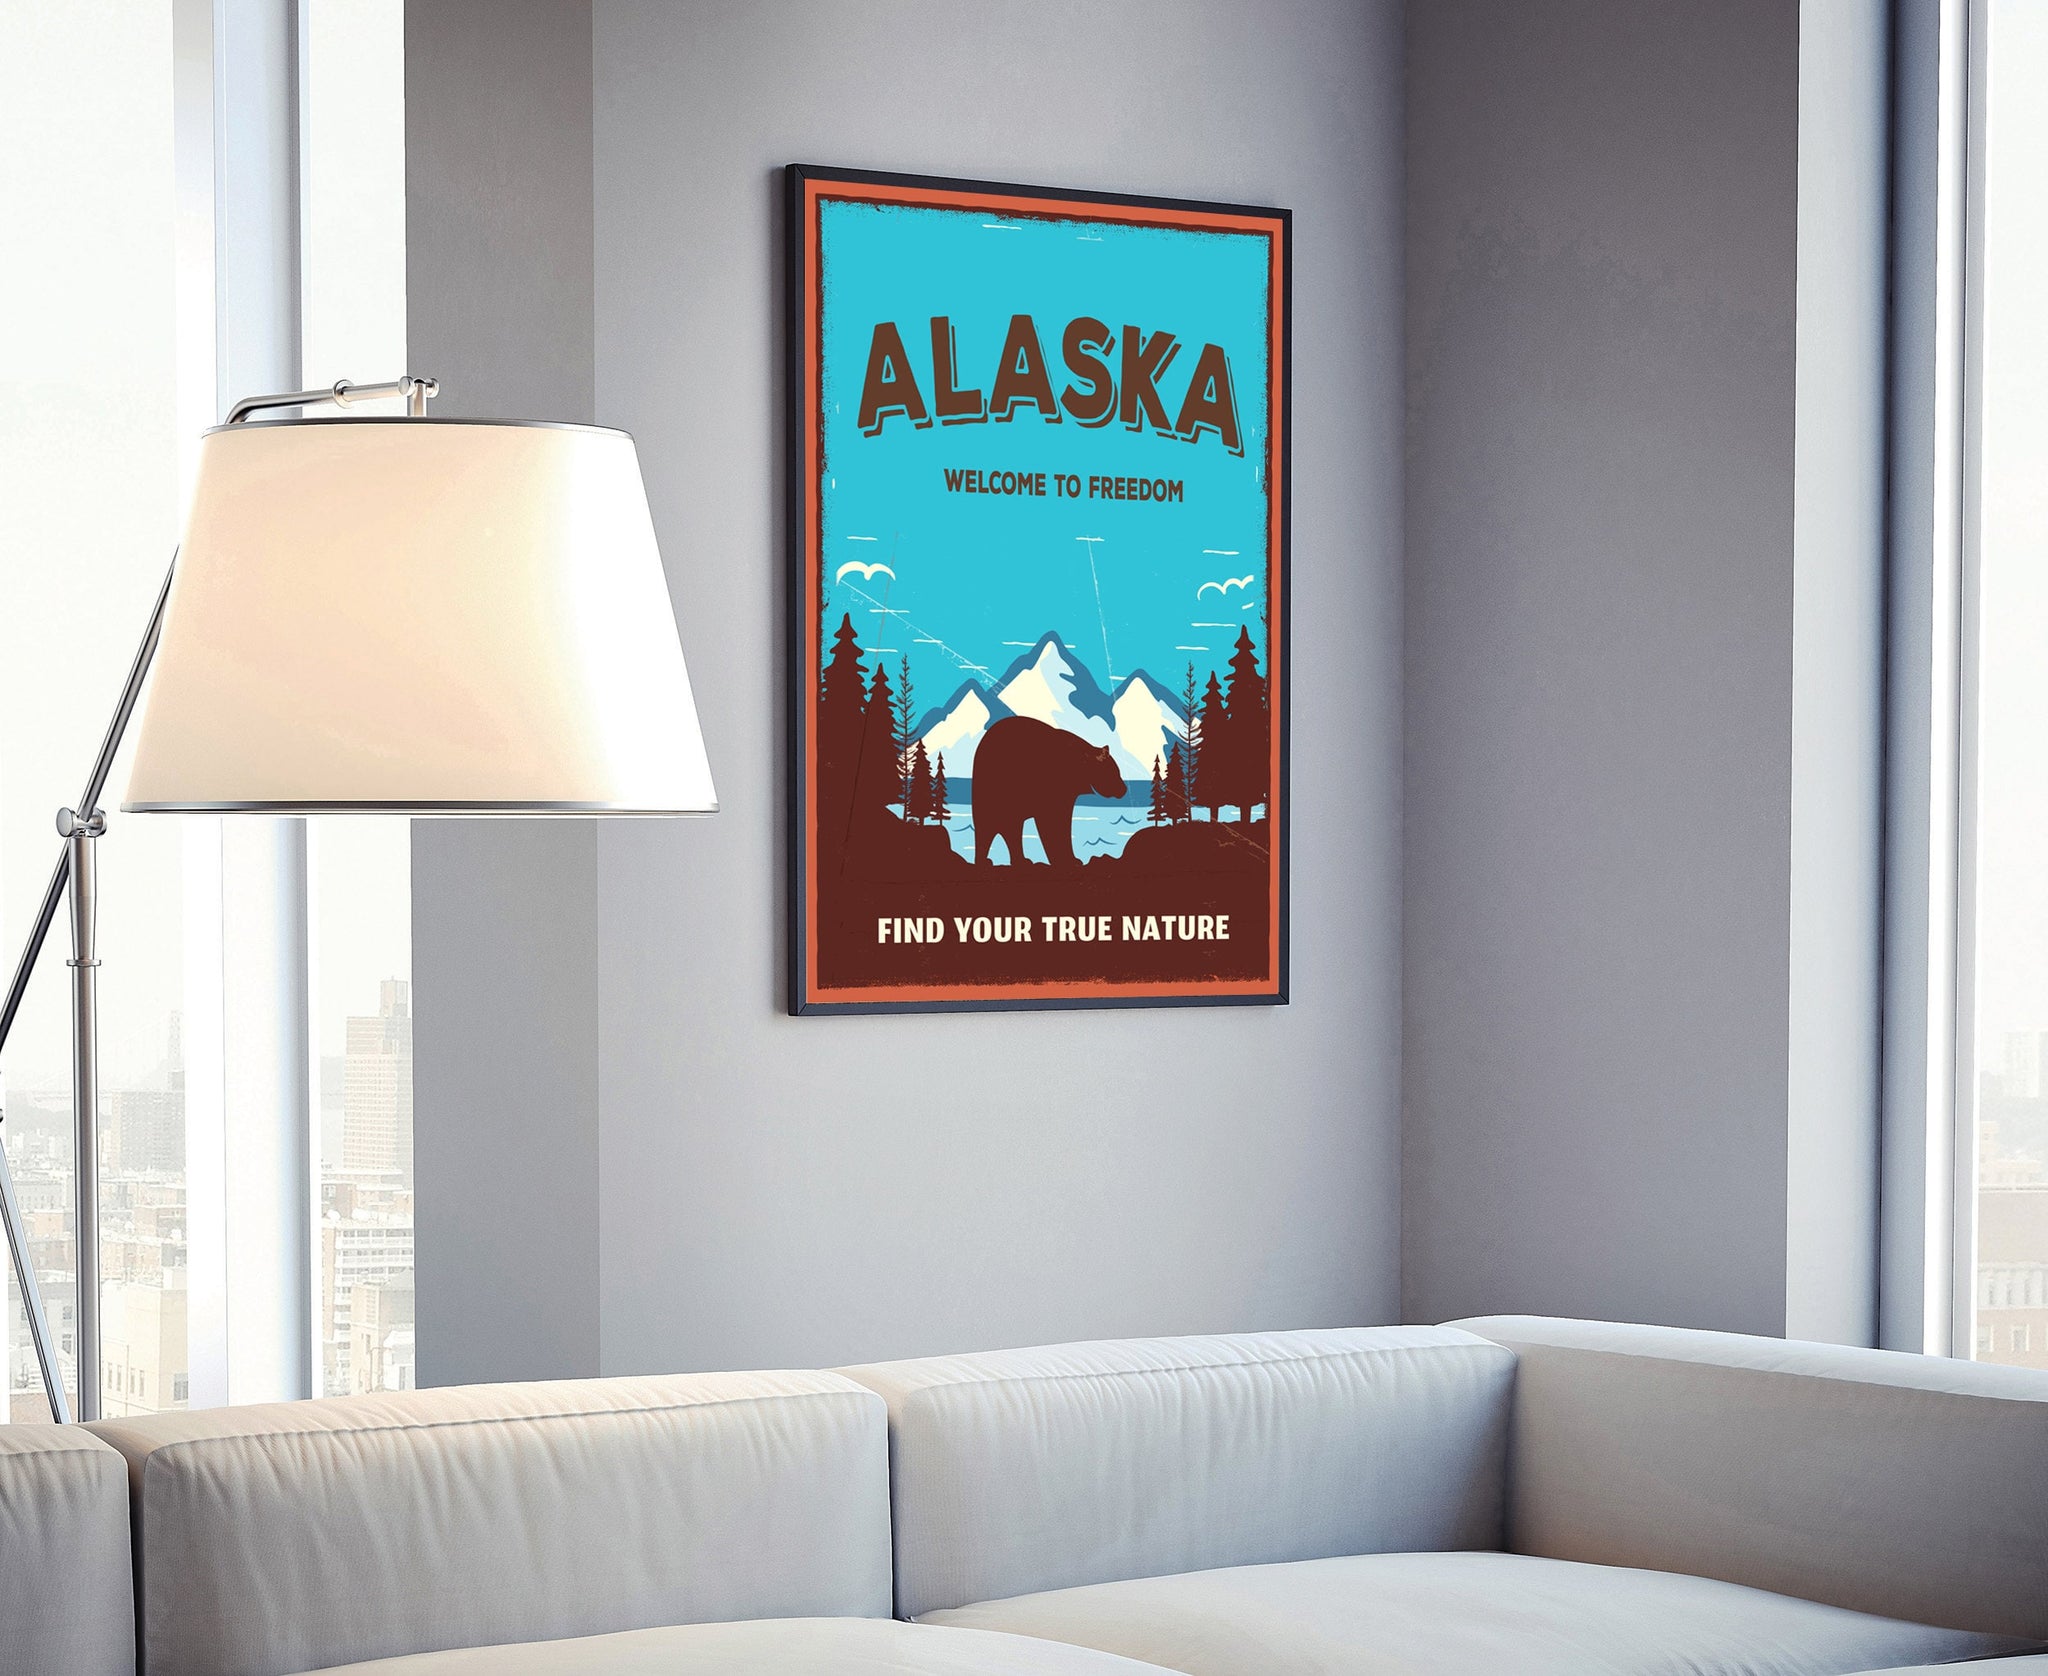 Alaska Vintage Rustic Poster Print